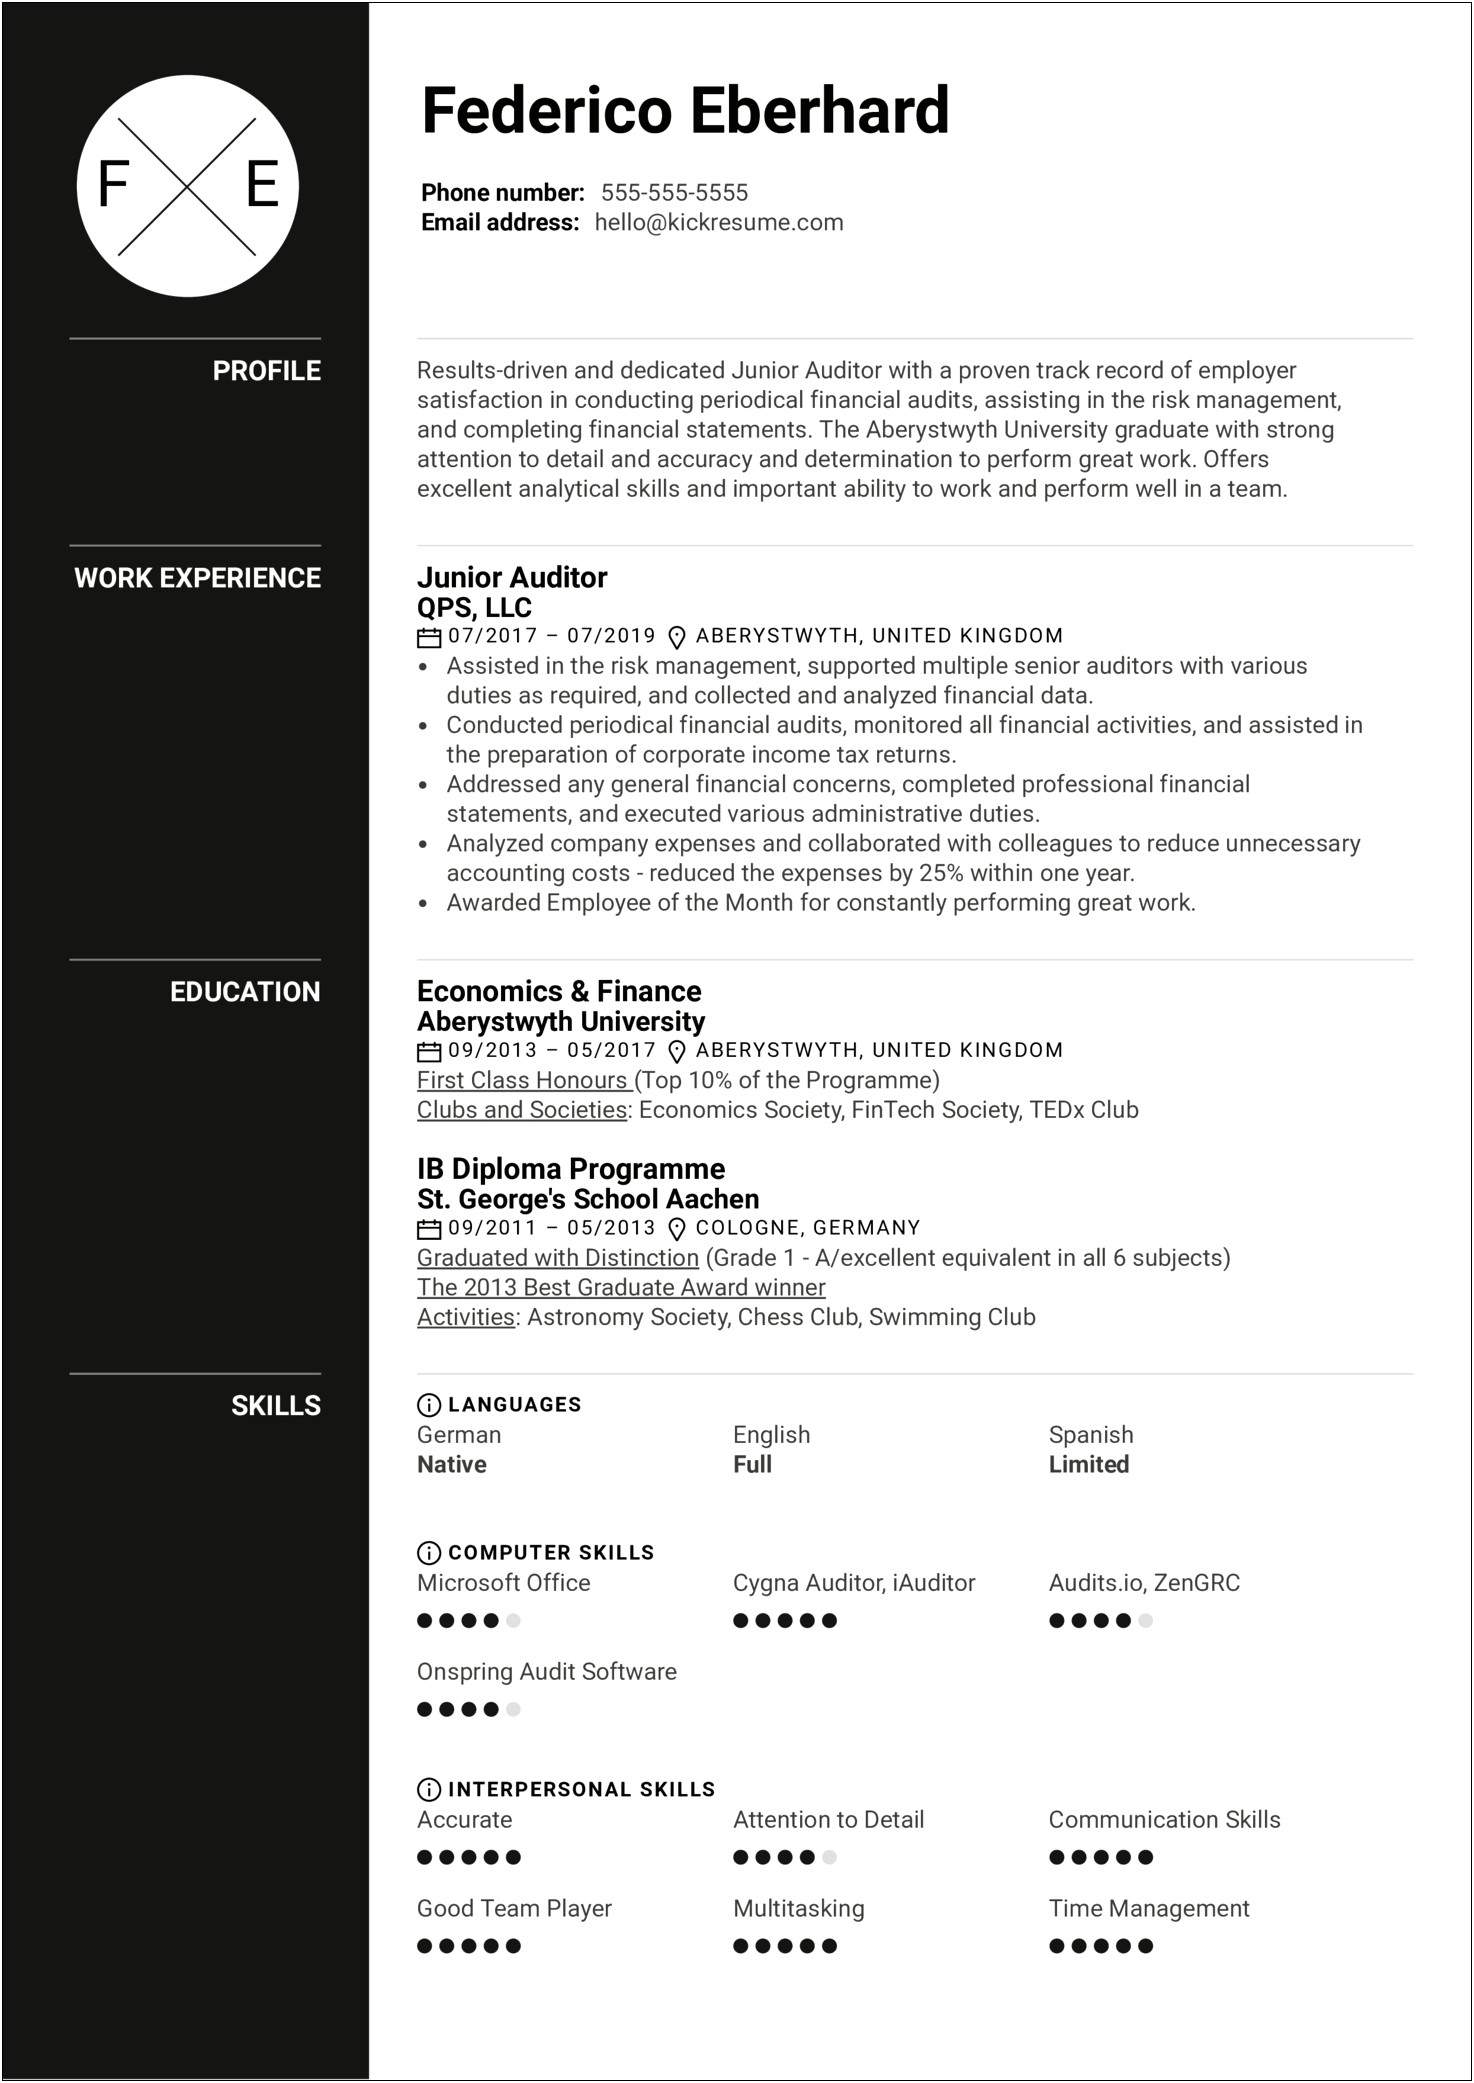 Resume Job Description For Auditor